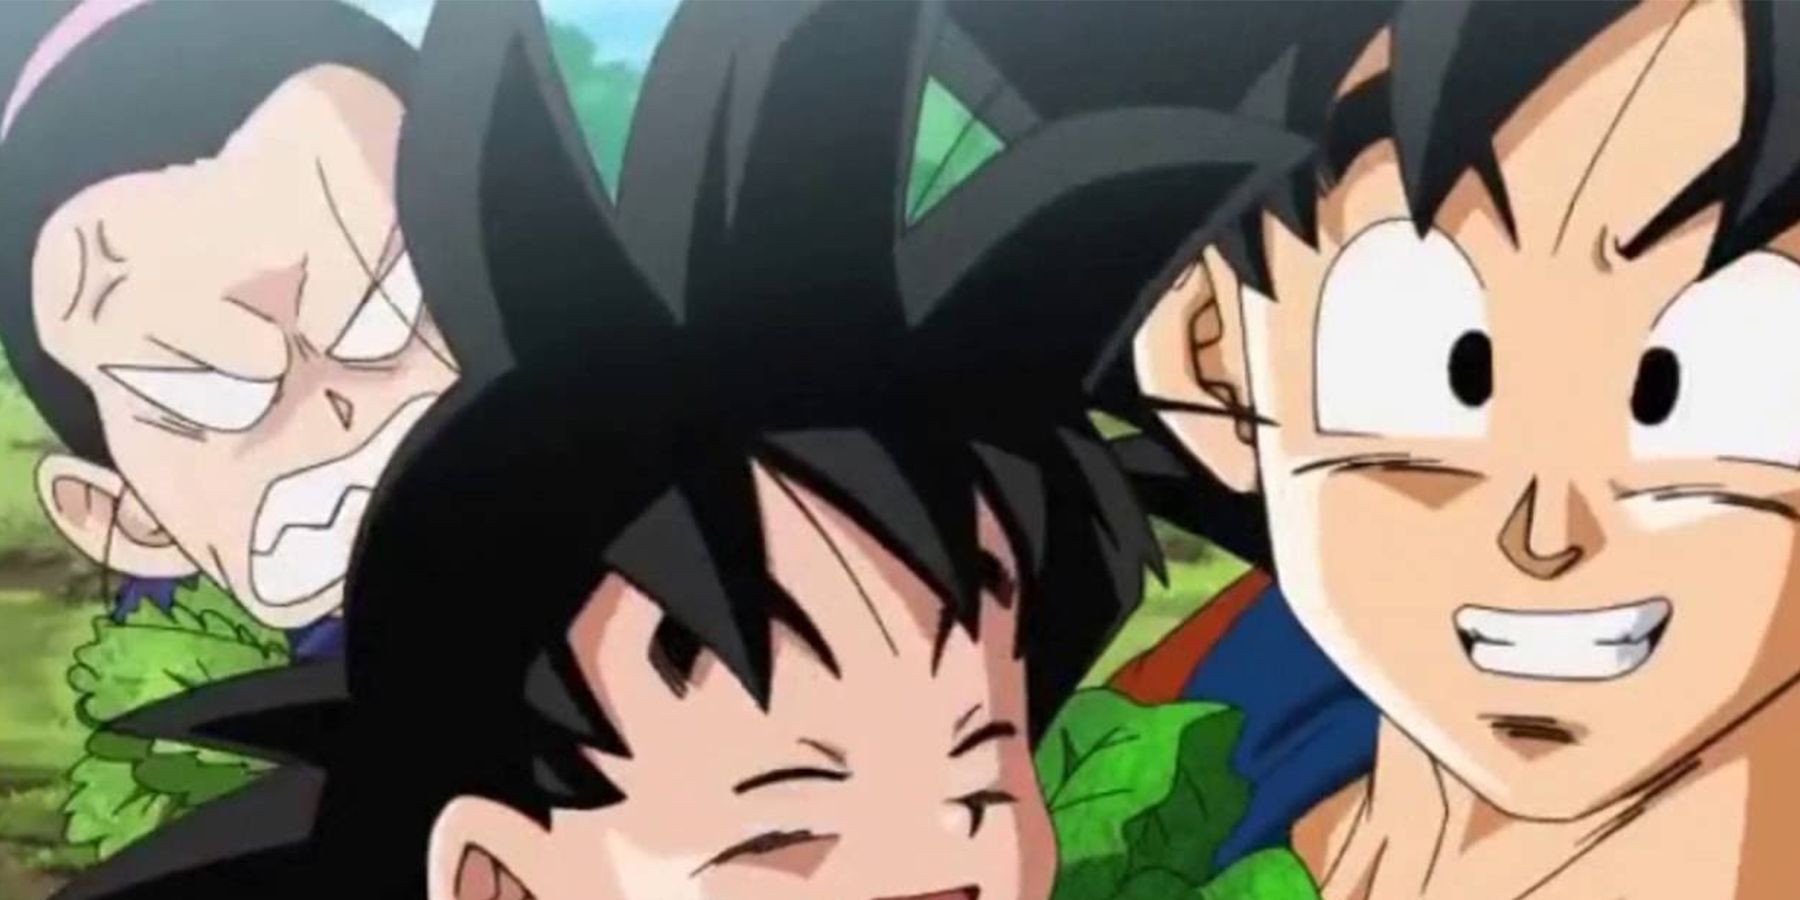 Gotan and Goku in Dragon Ball Z.